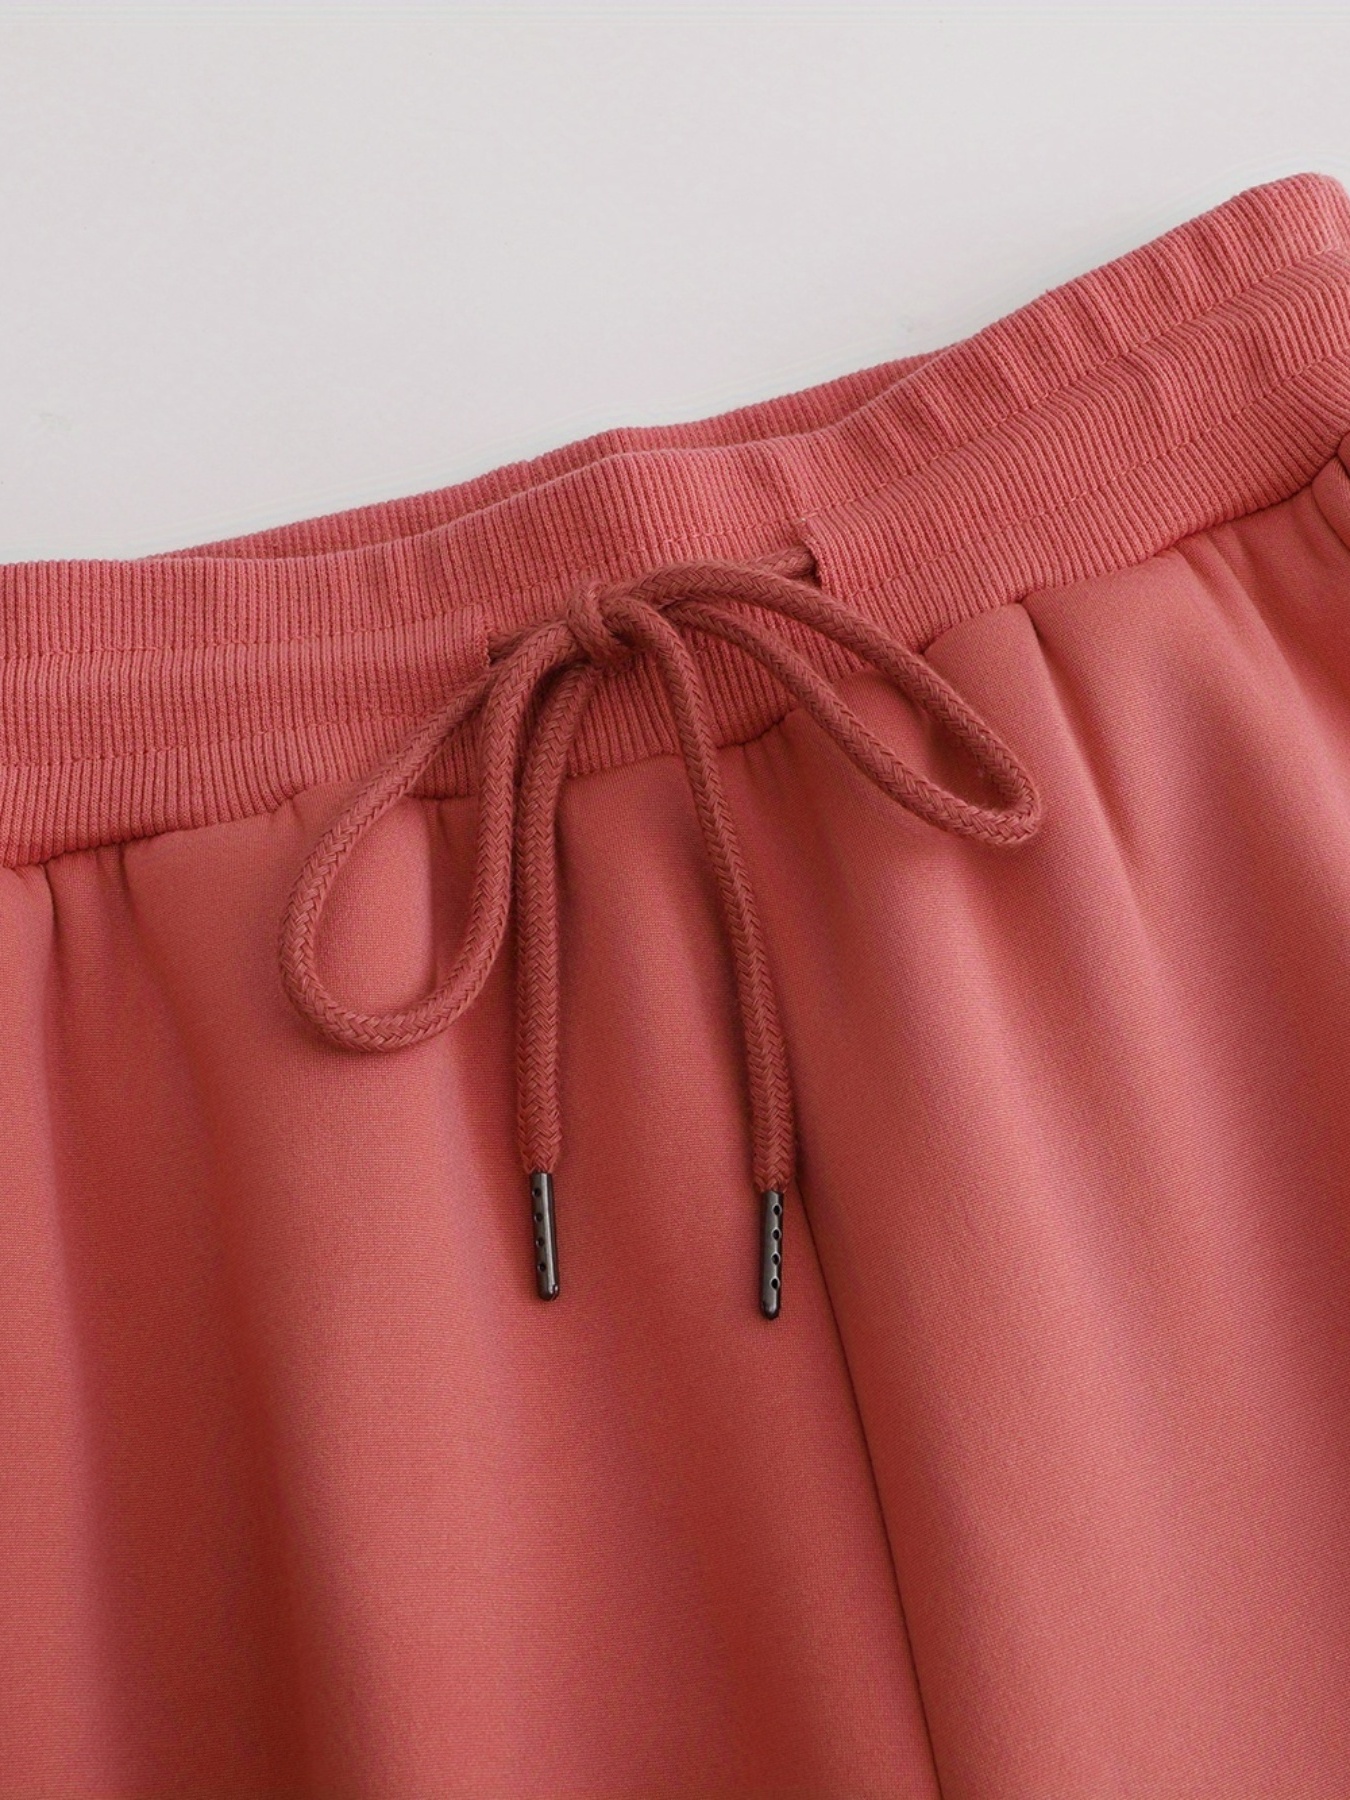 plush thermal pants, winter plush thermal pants casual drawstring pocket pants womens clothing details 10